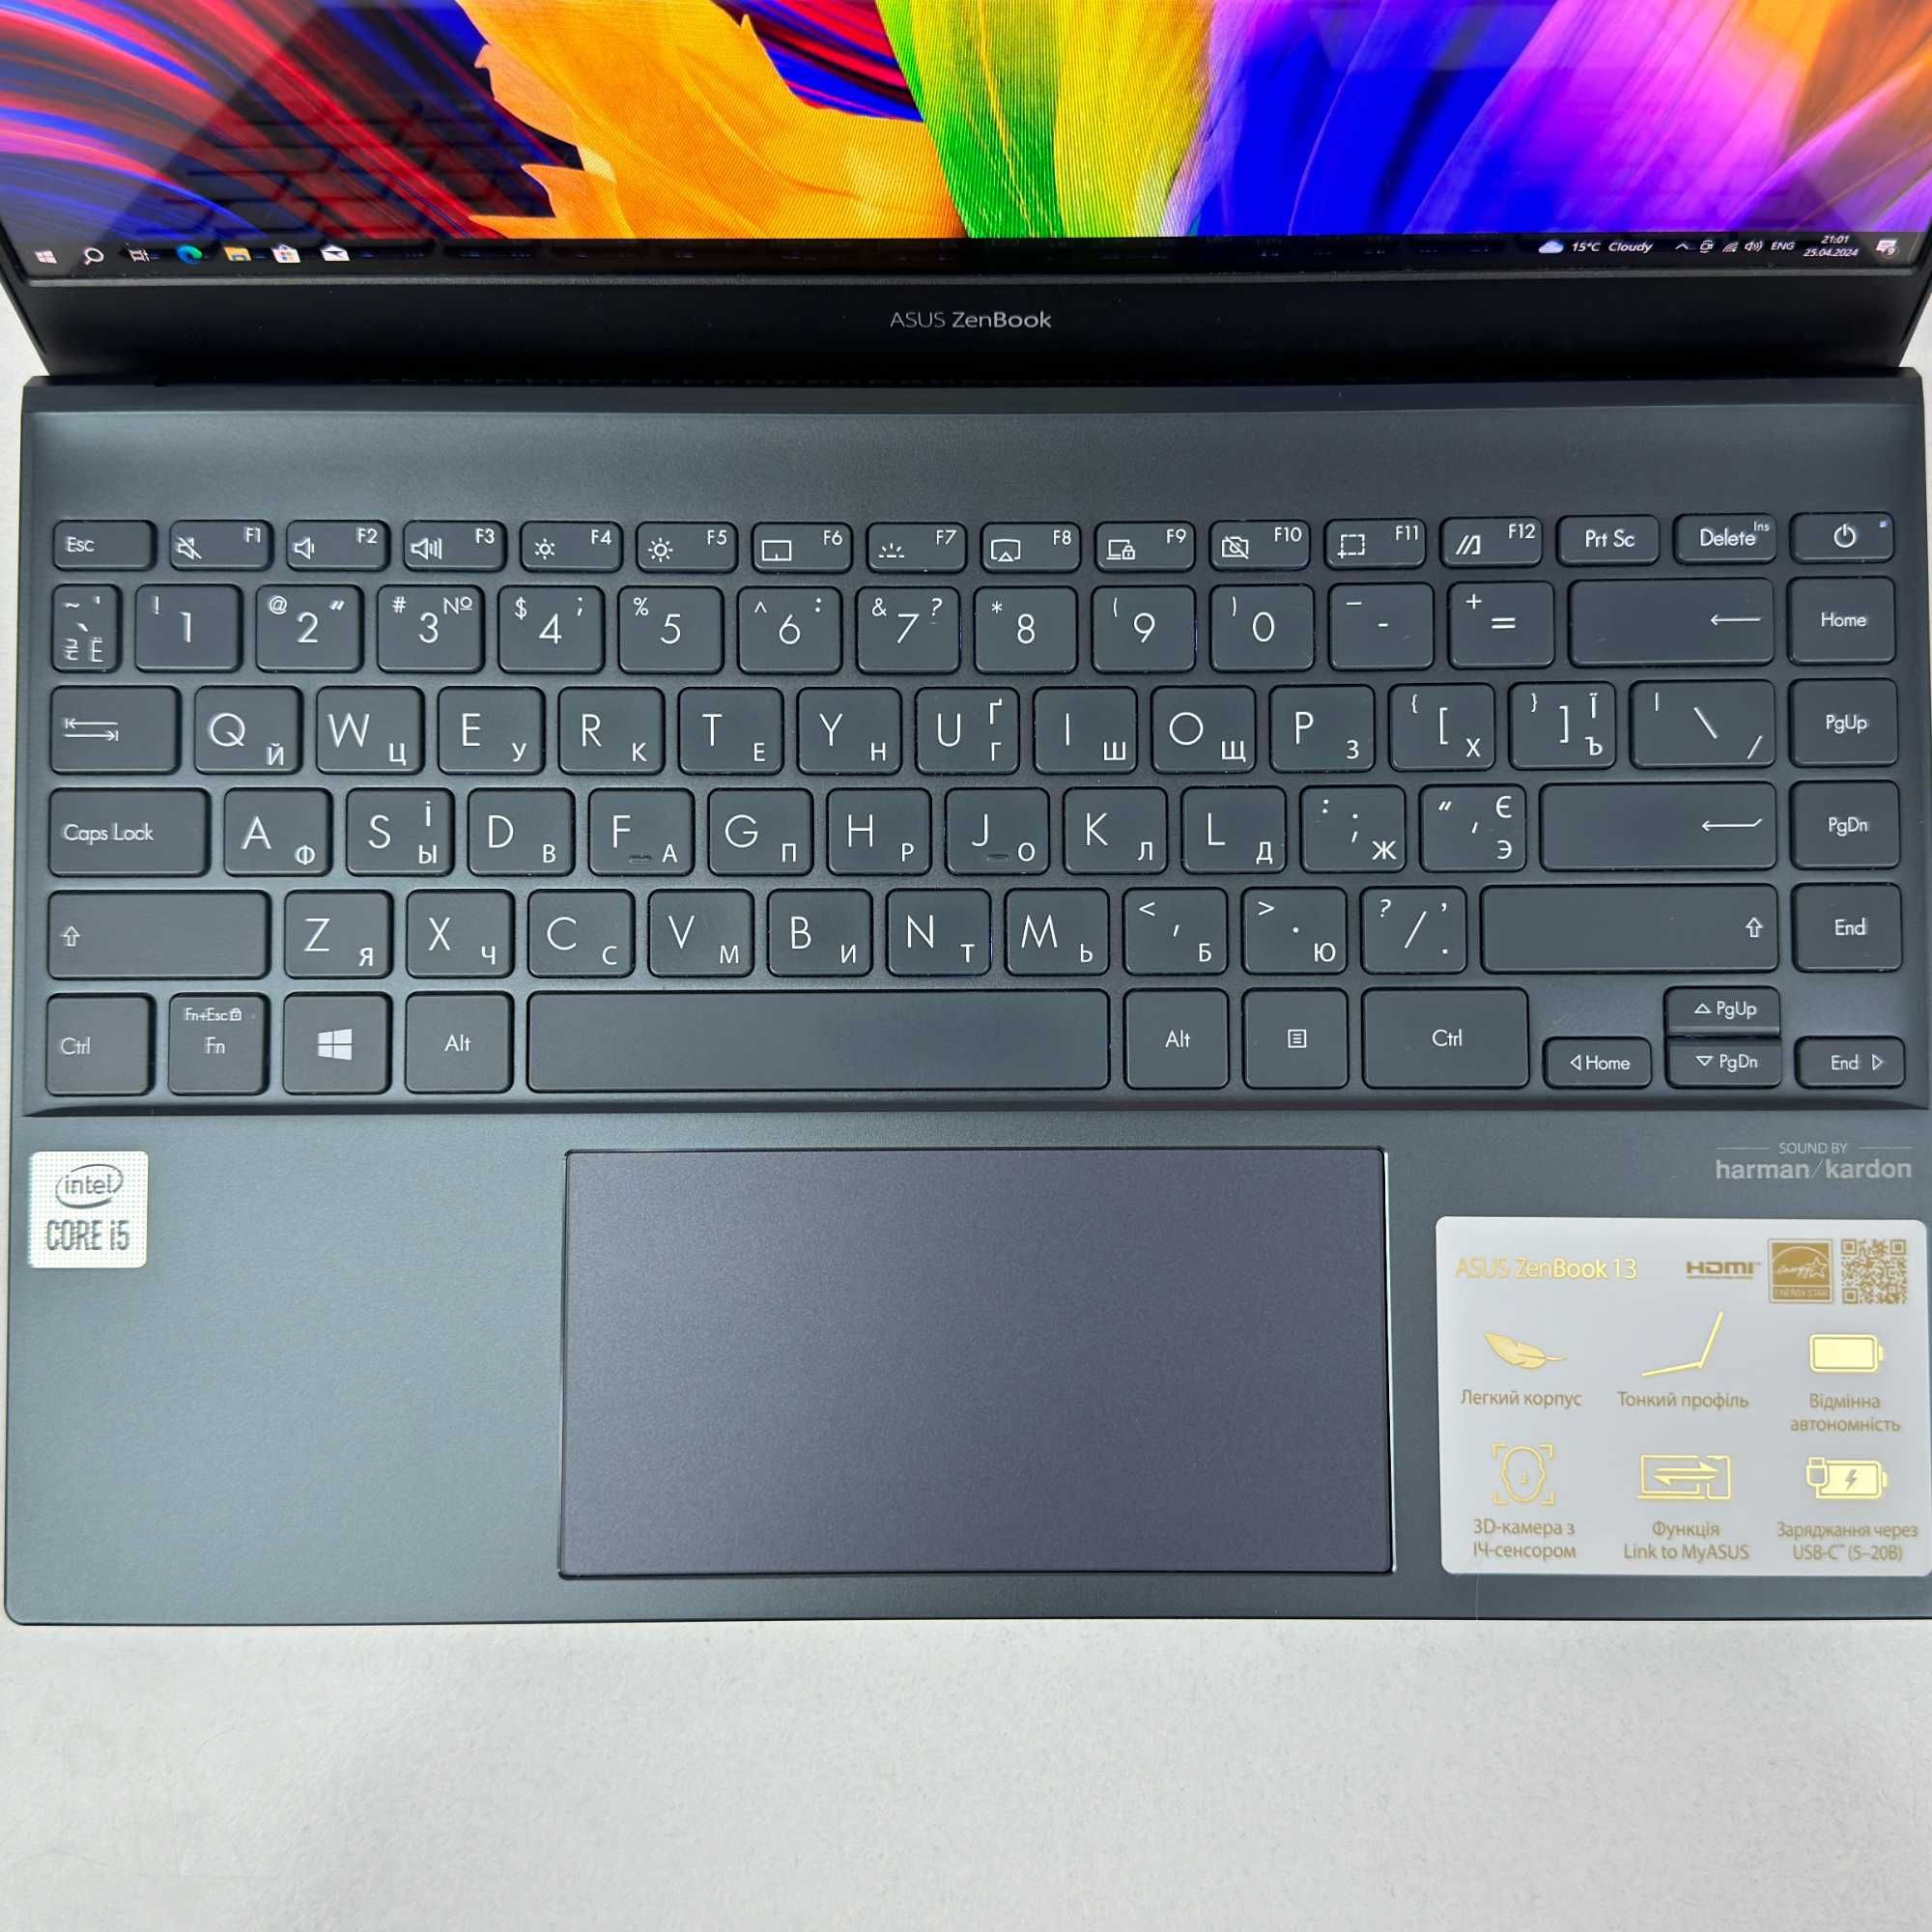 Asus Zenbook OLED Iris Plus i5-1035G4 RAM 16 Gb SSD 512 Gb